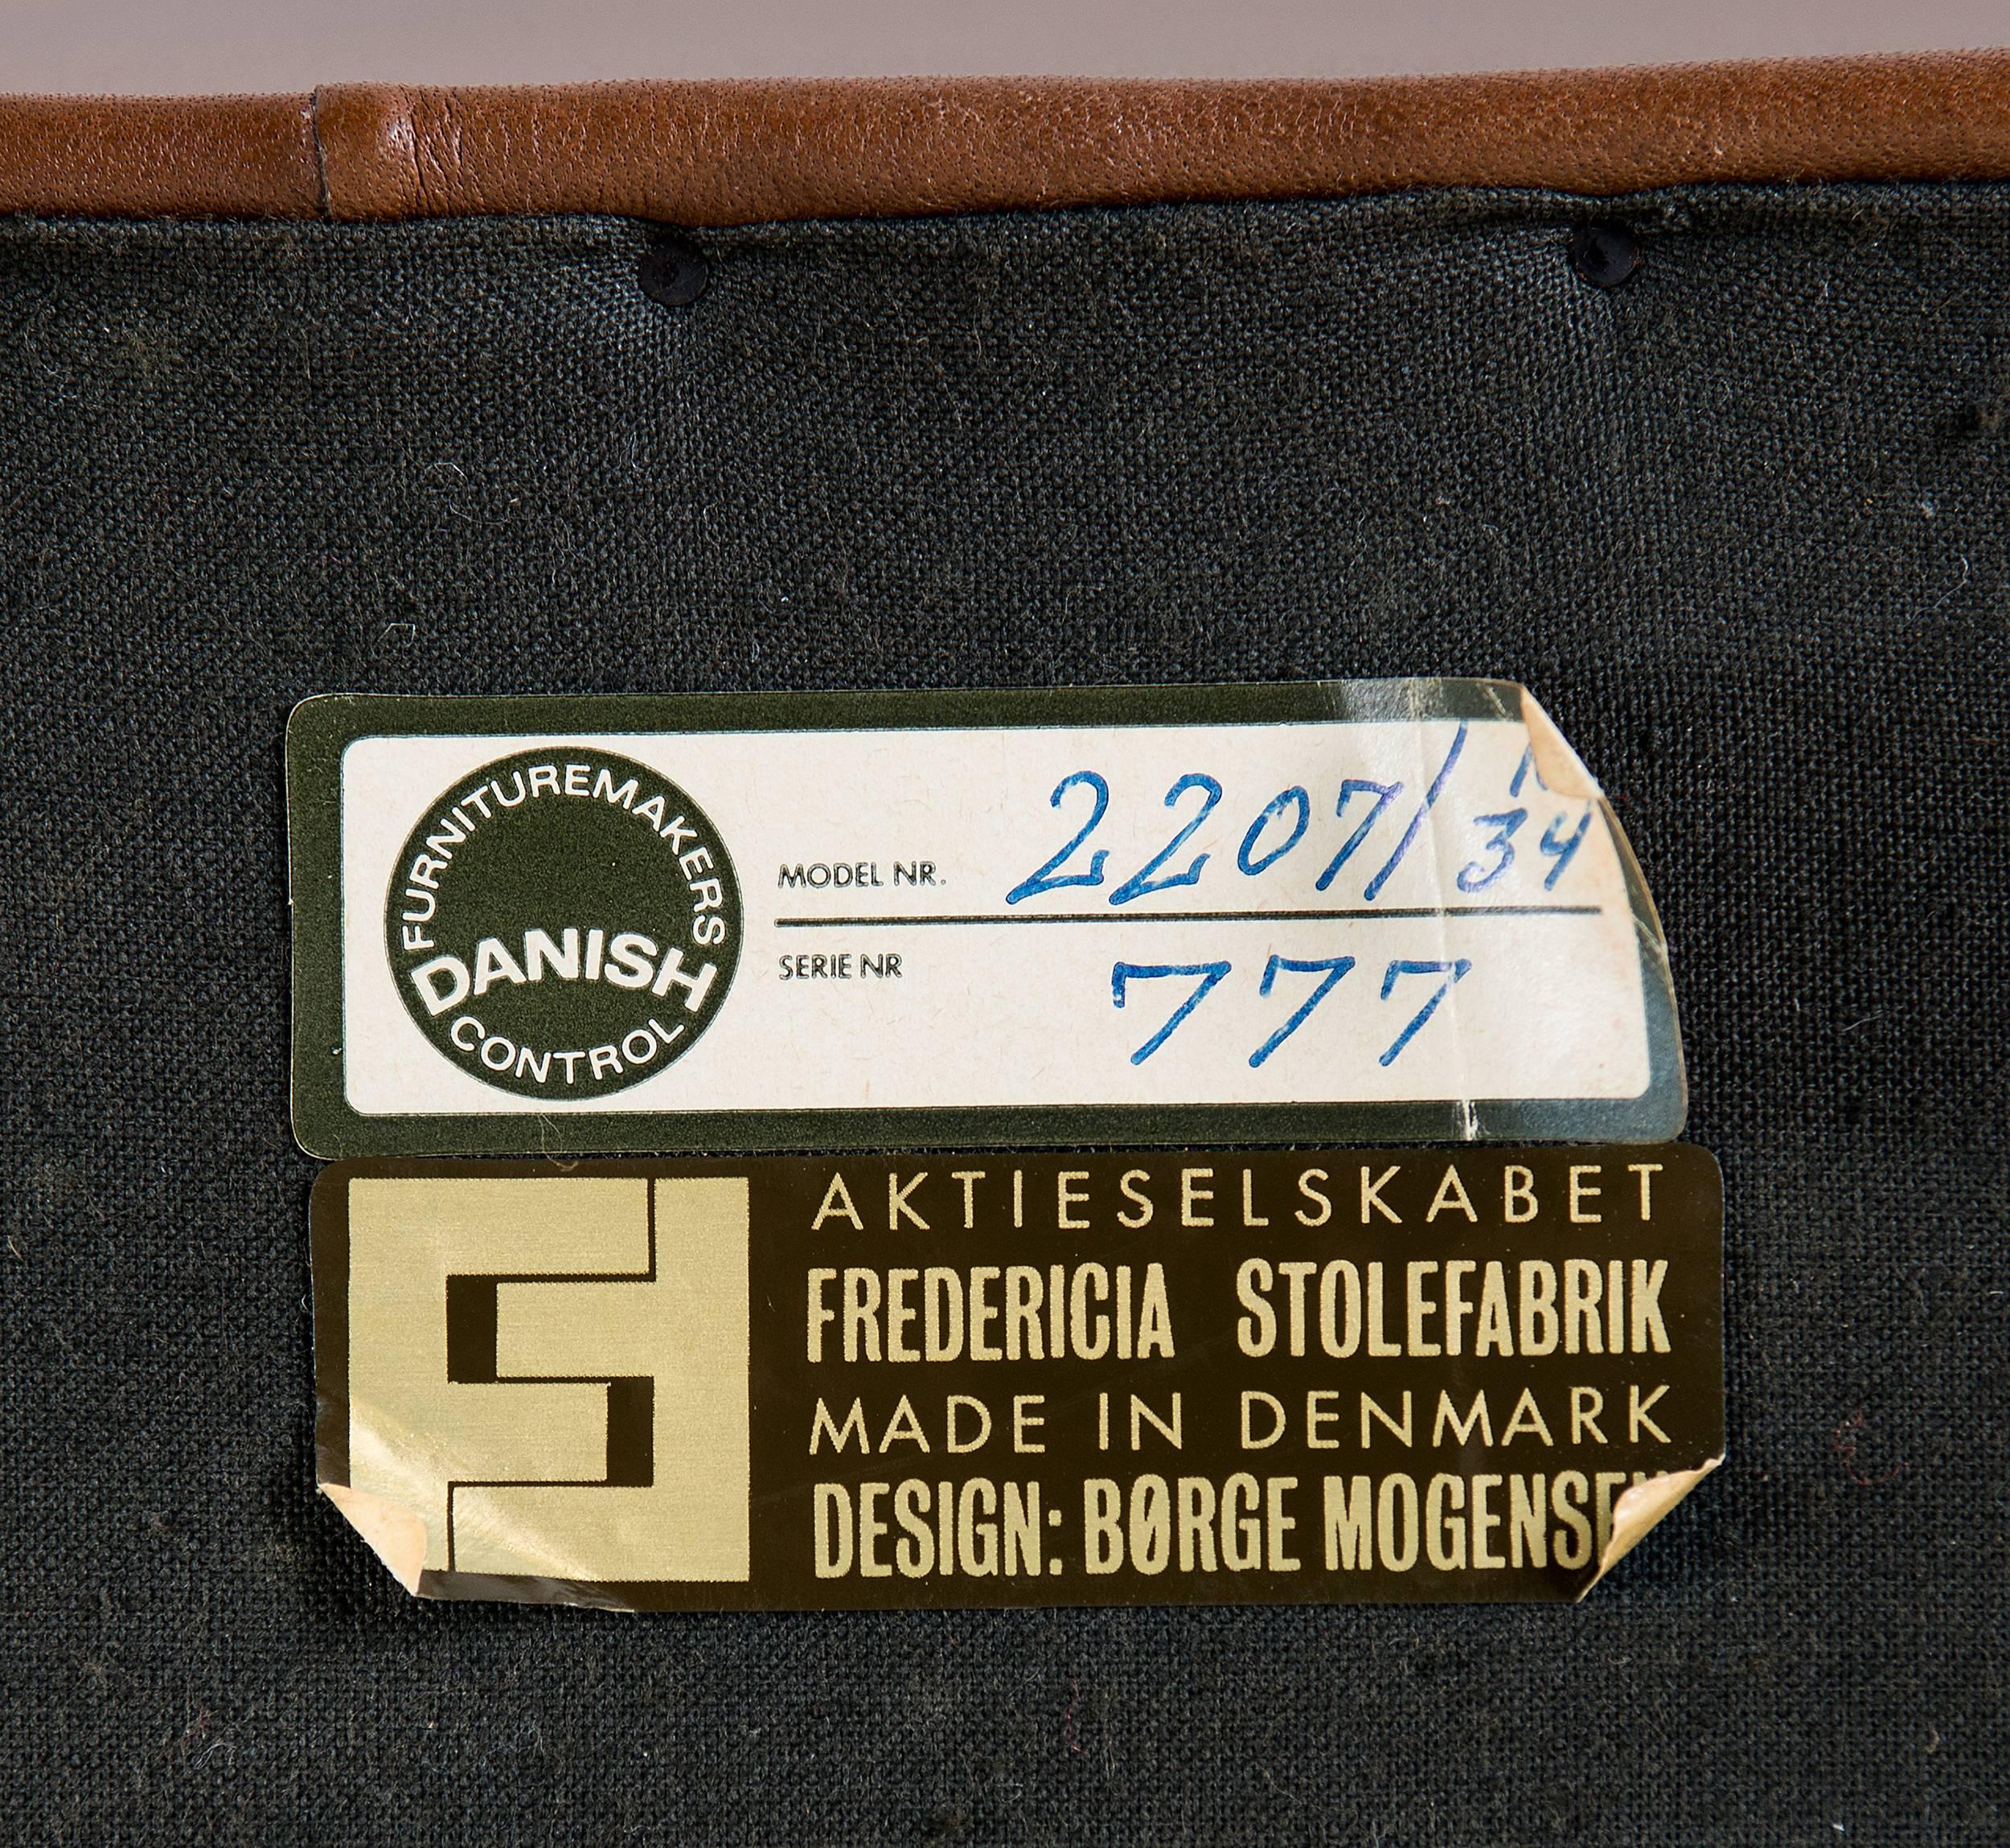 Børge Mogensen Model #2207 Leather Lounge Chair For Sale 2